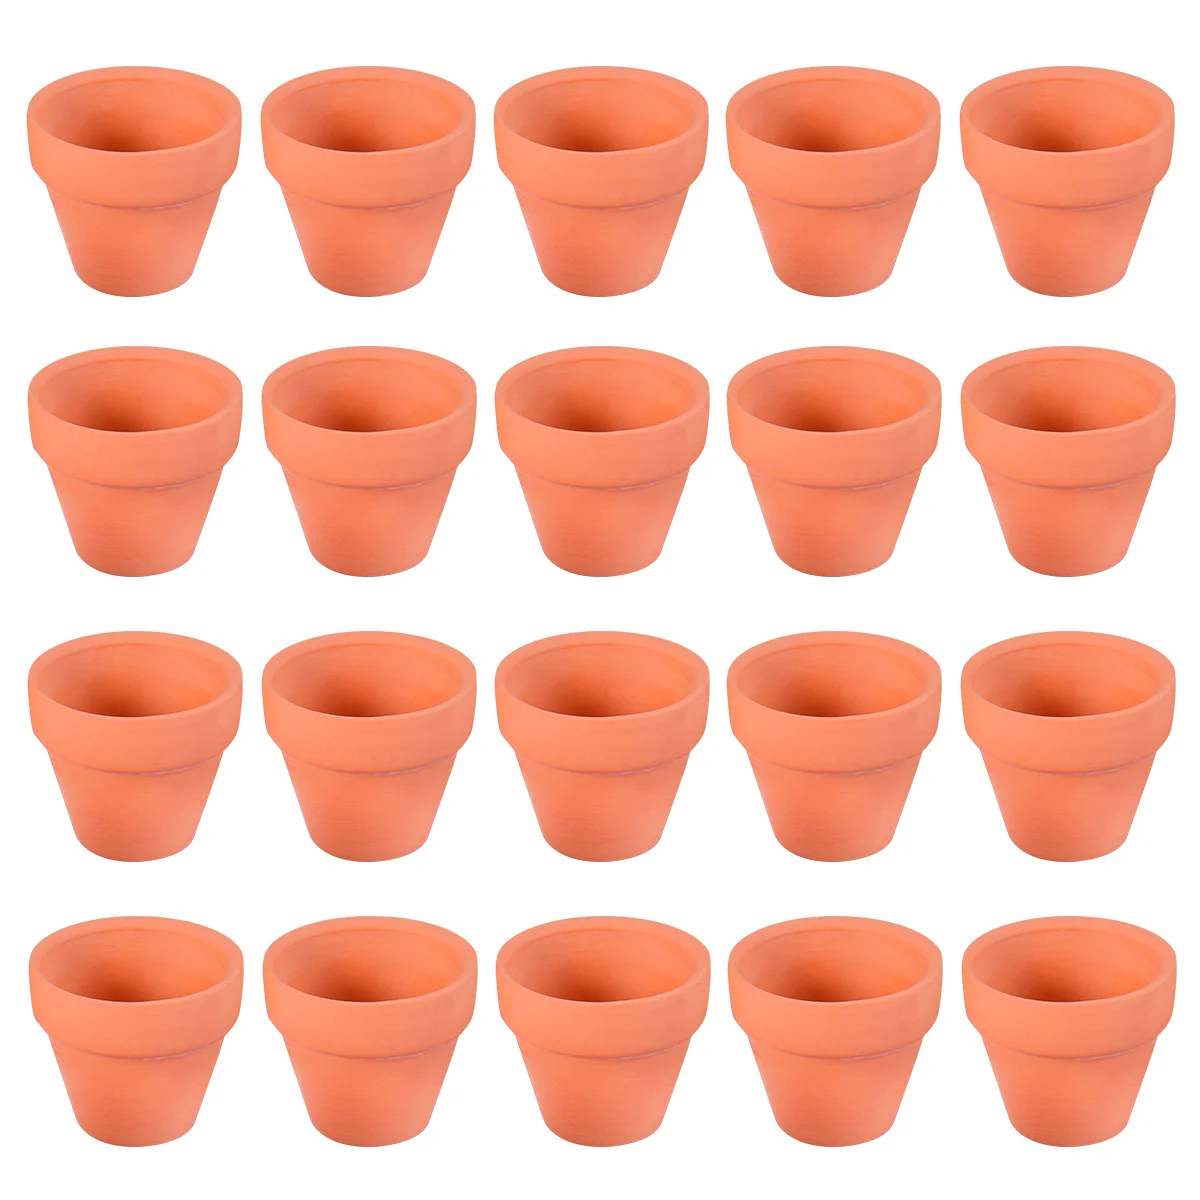 

20 Terracotta Pot Clay Ceramics Pots Flower Pots for Home Gardening Wedding Favors Crafts Plants